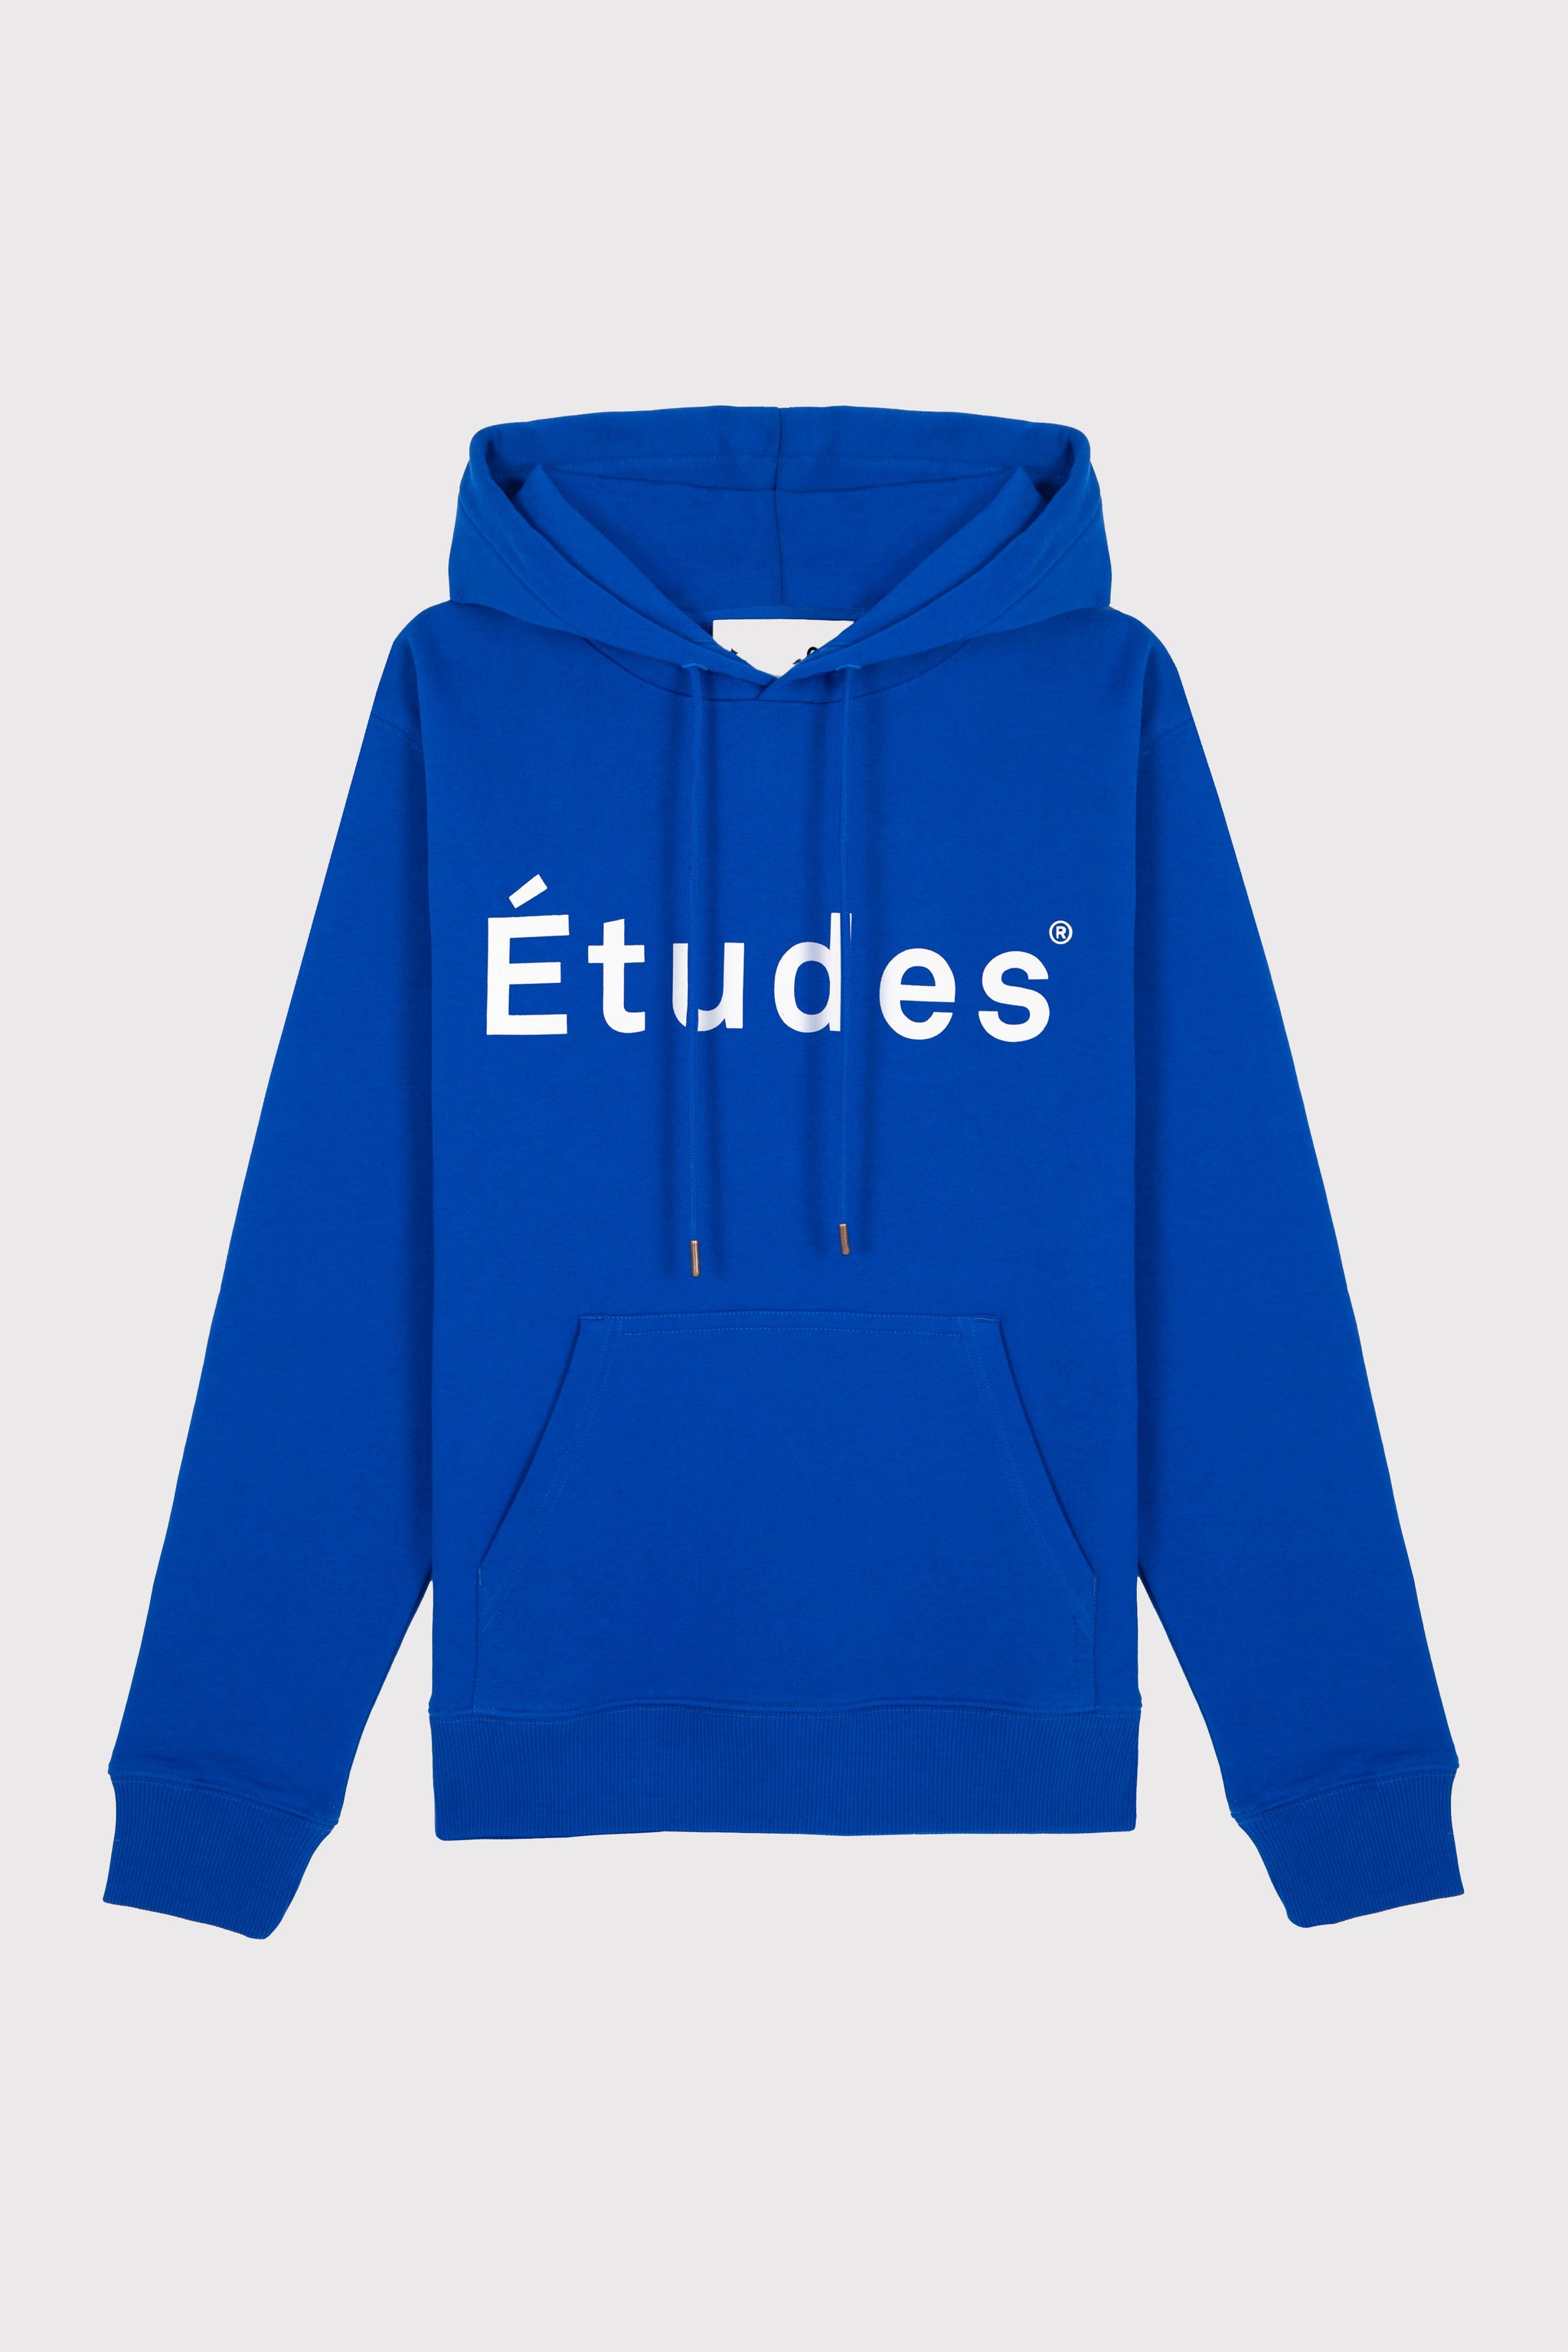 Études HOODIE ETUDES BLUE Sweatshirt 2